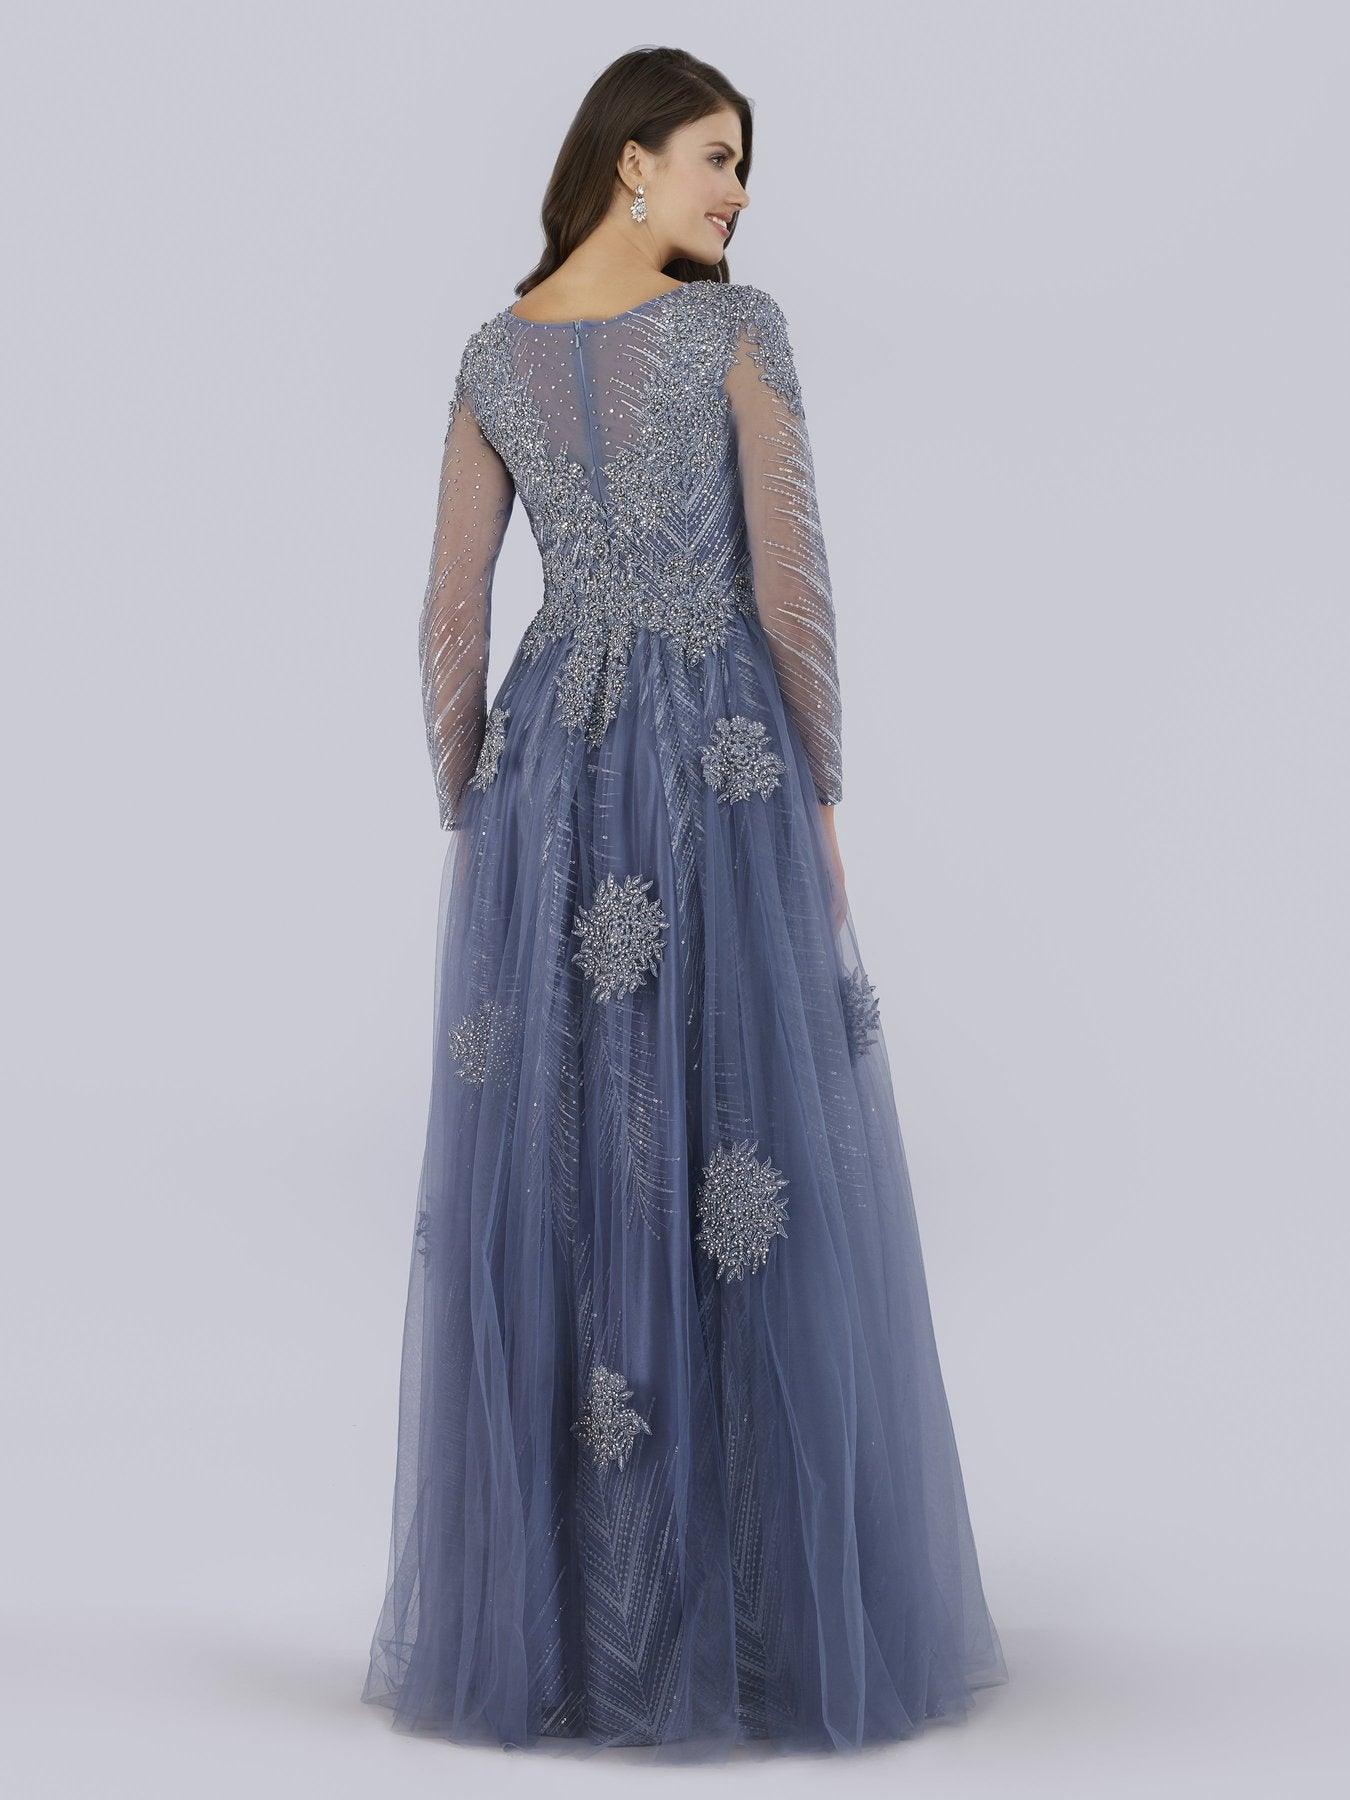 Lara Dresses Long Sleeve Prom Dress 29760 - The Dress Outlet